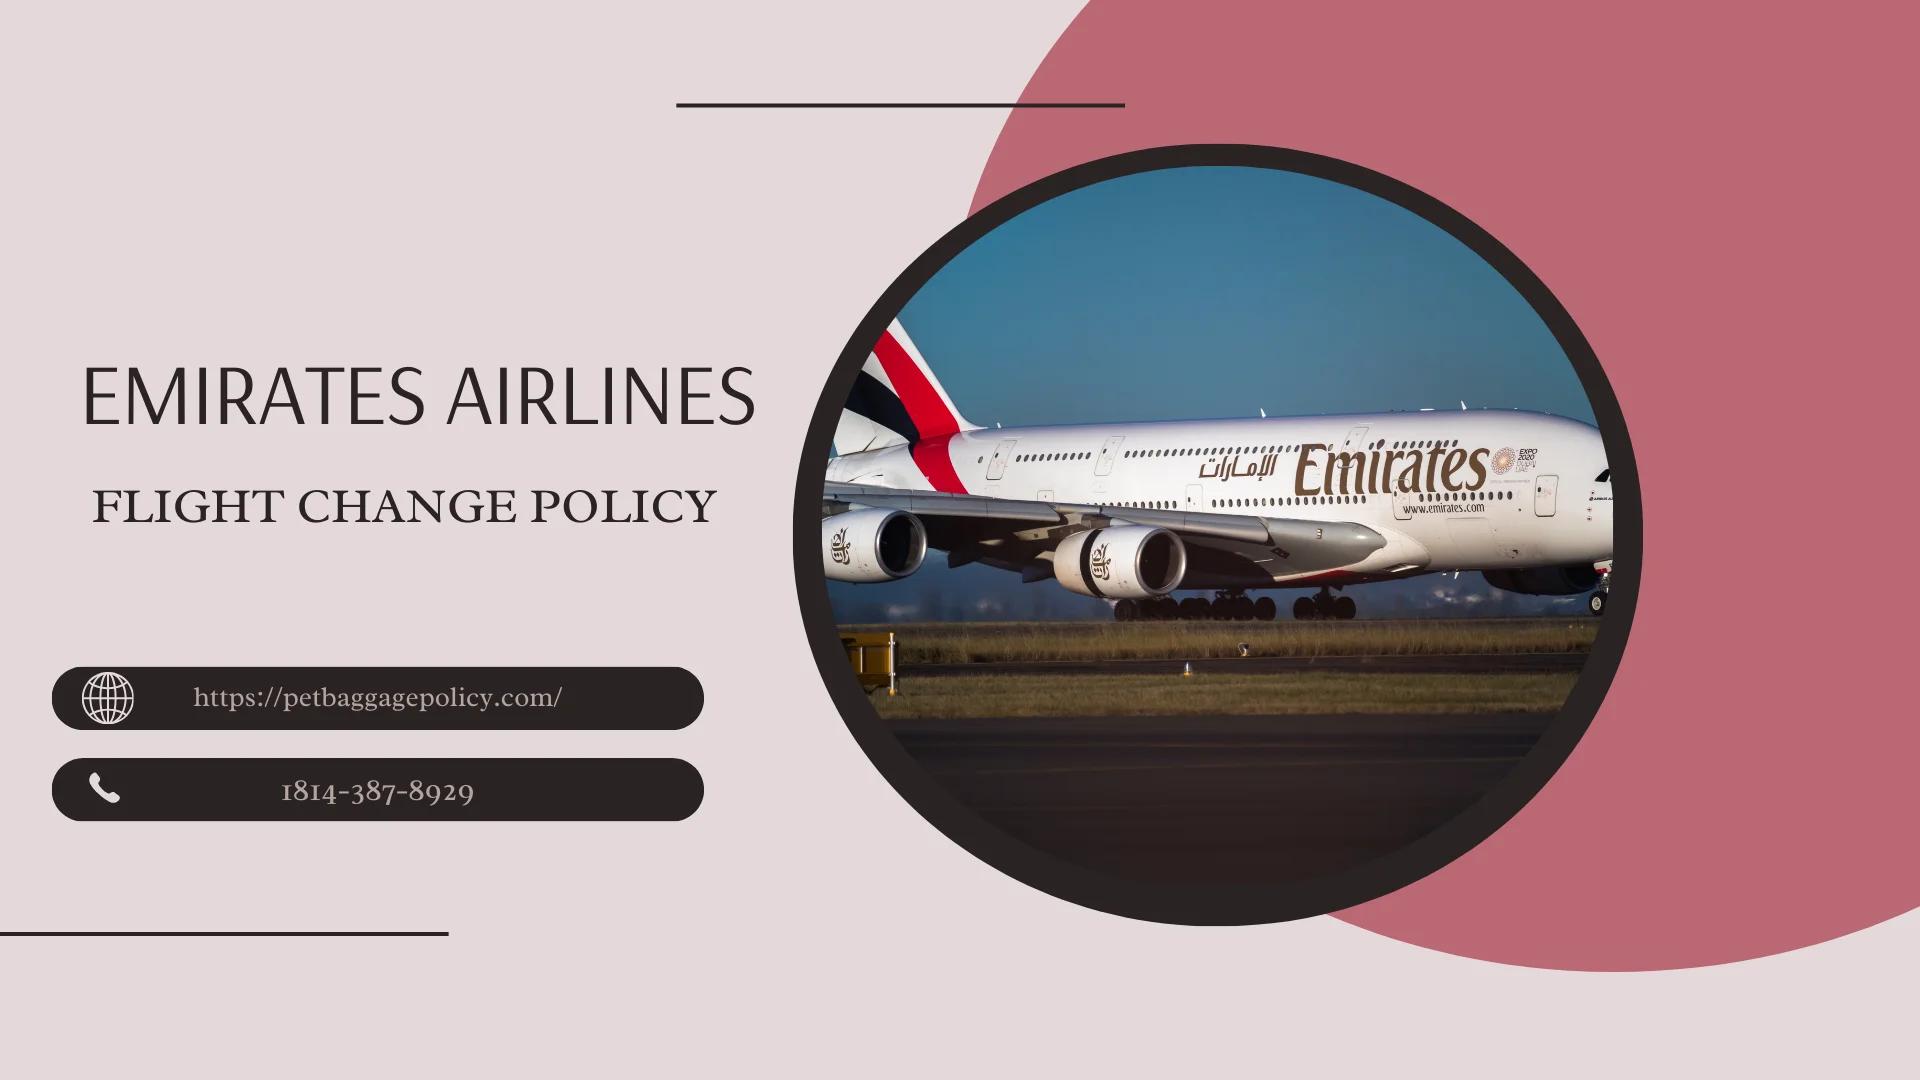 Emirates flight change policy